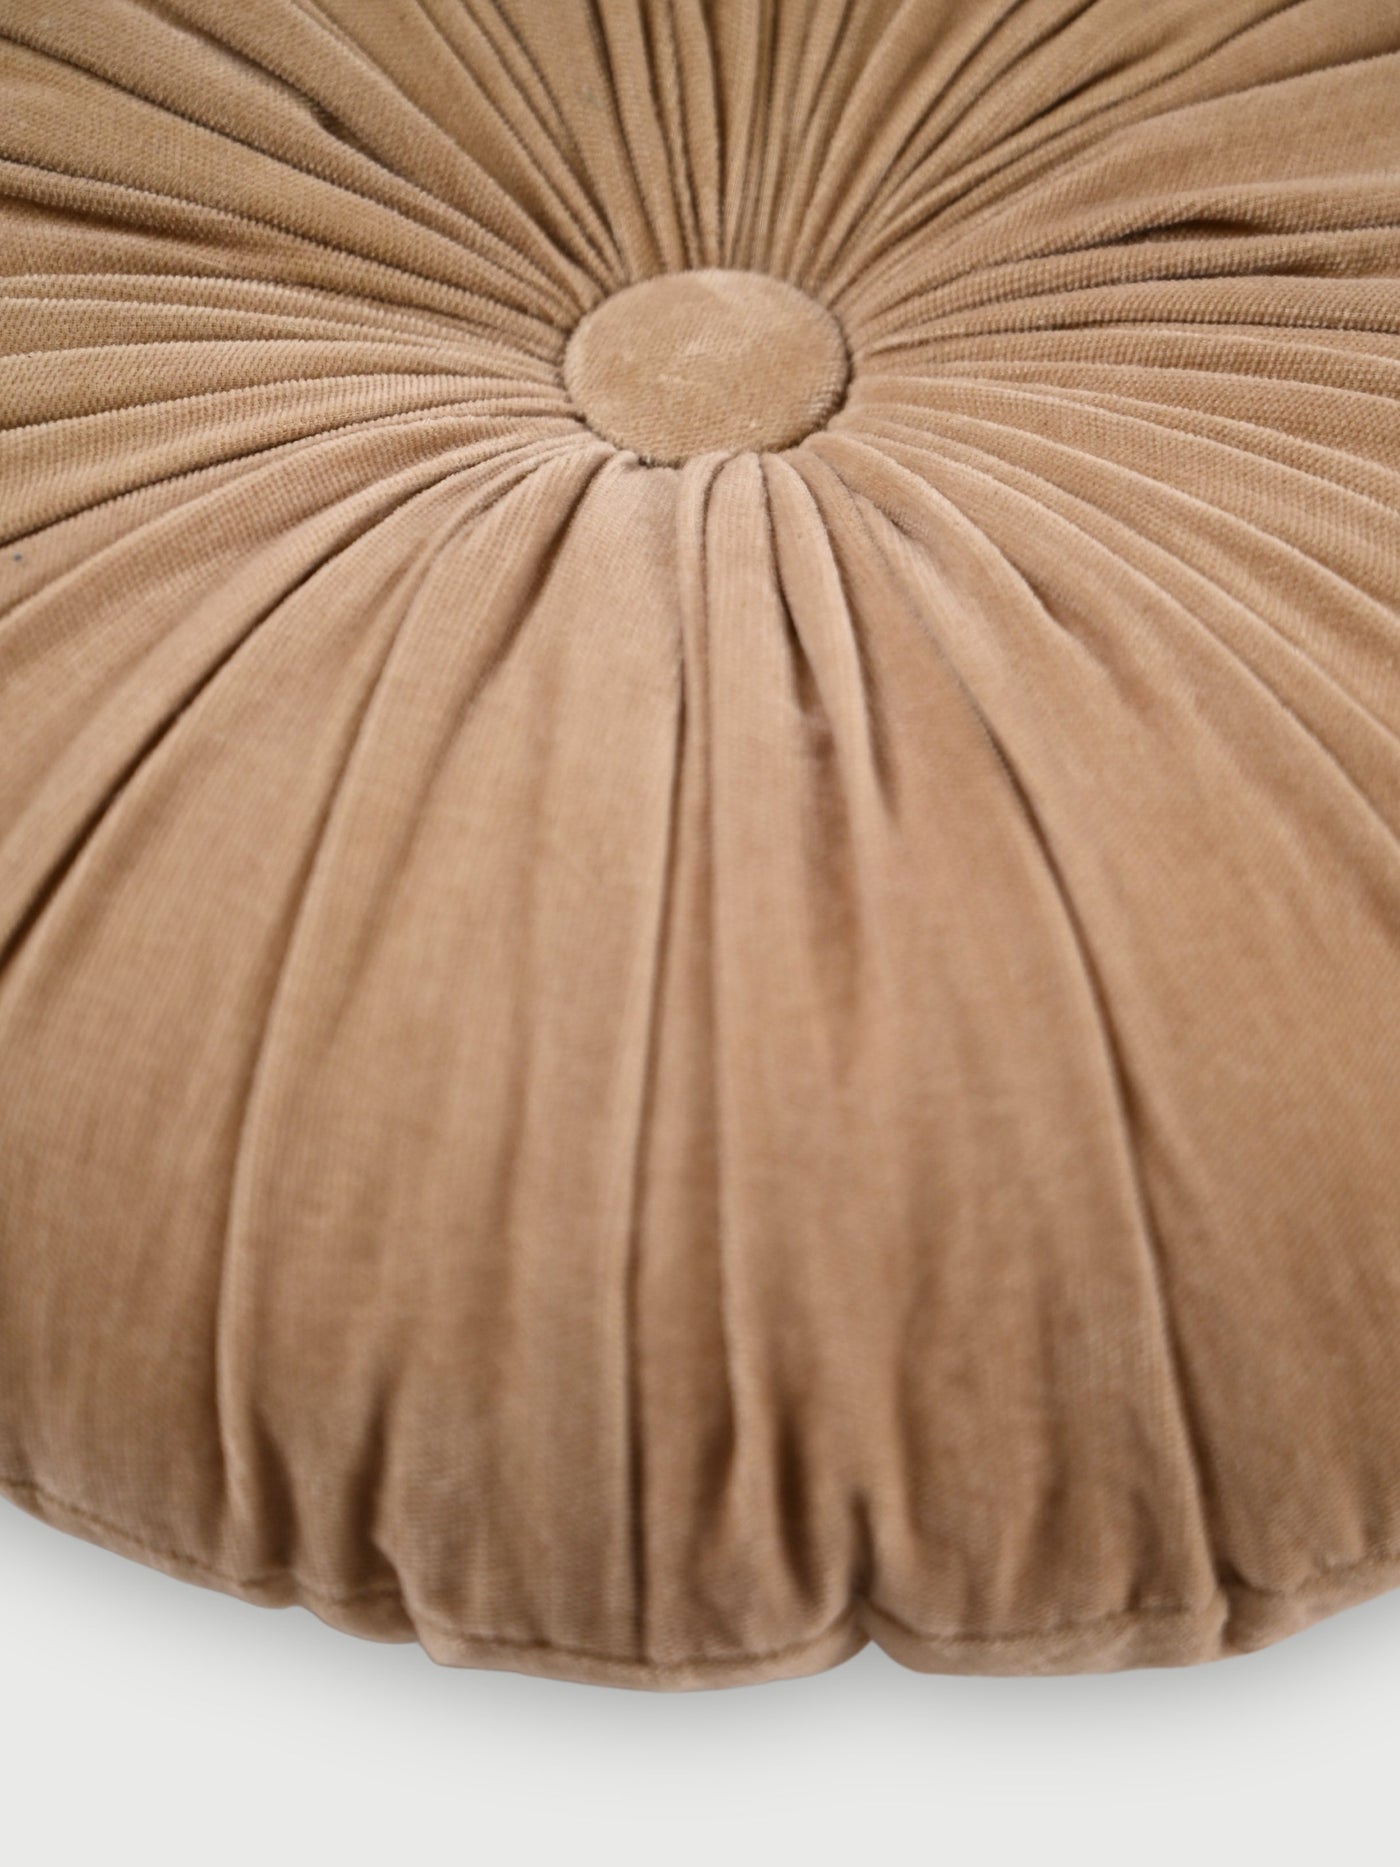 Round Cushion Cover - Cuddle